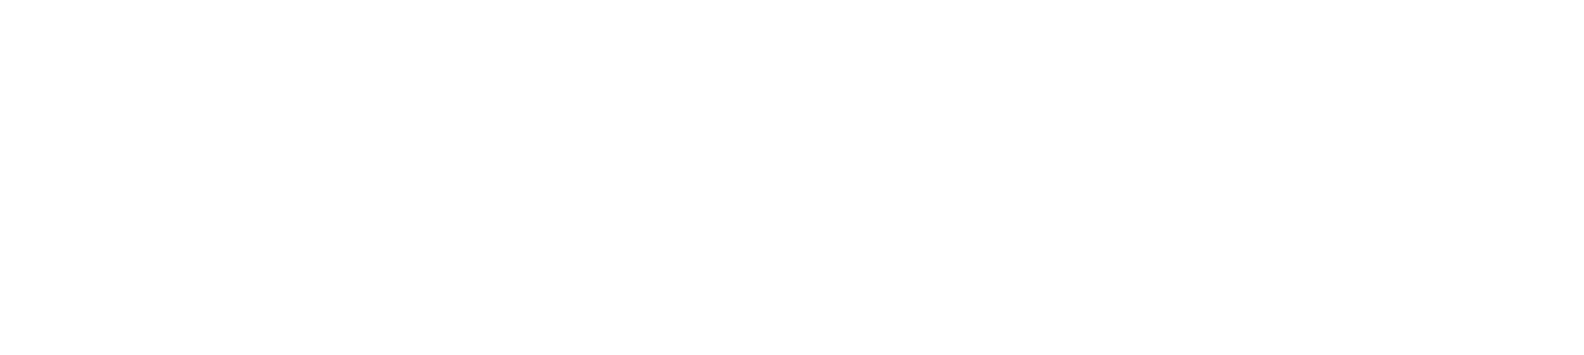 C. H. Robinson logo large for dark backgrounds (transparent PNG)